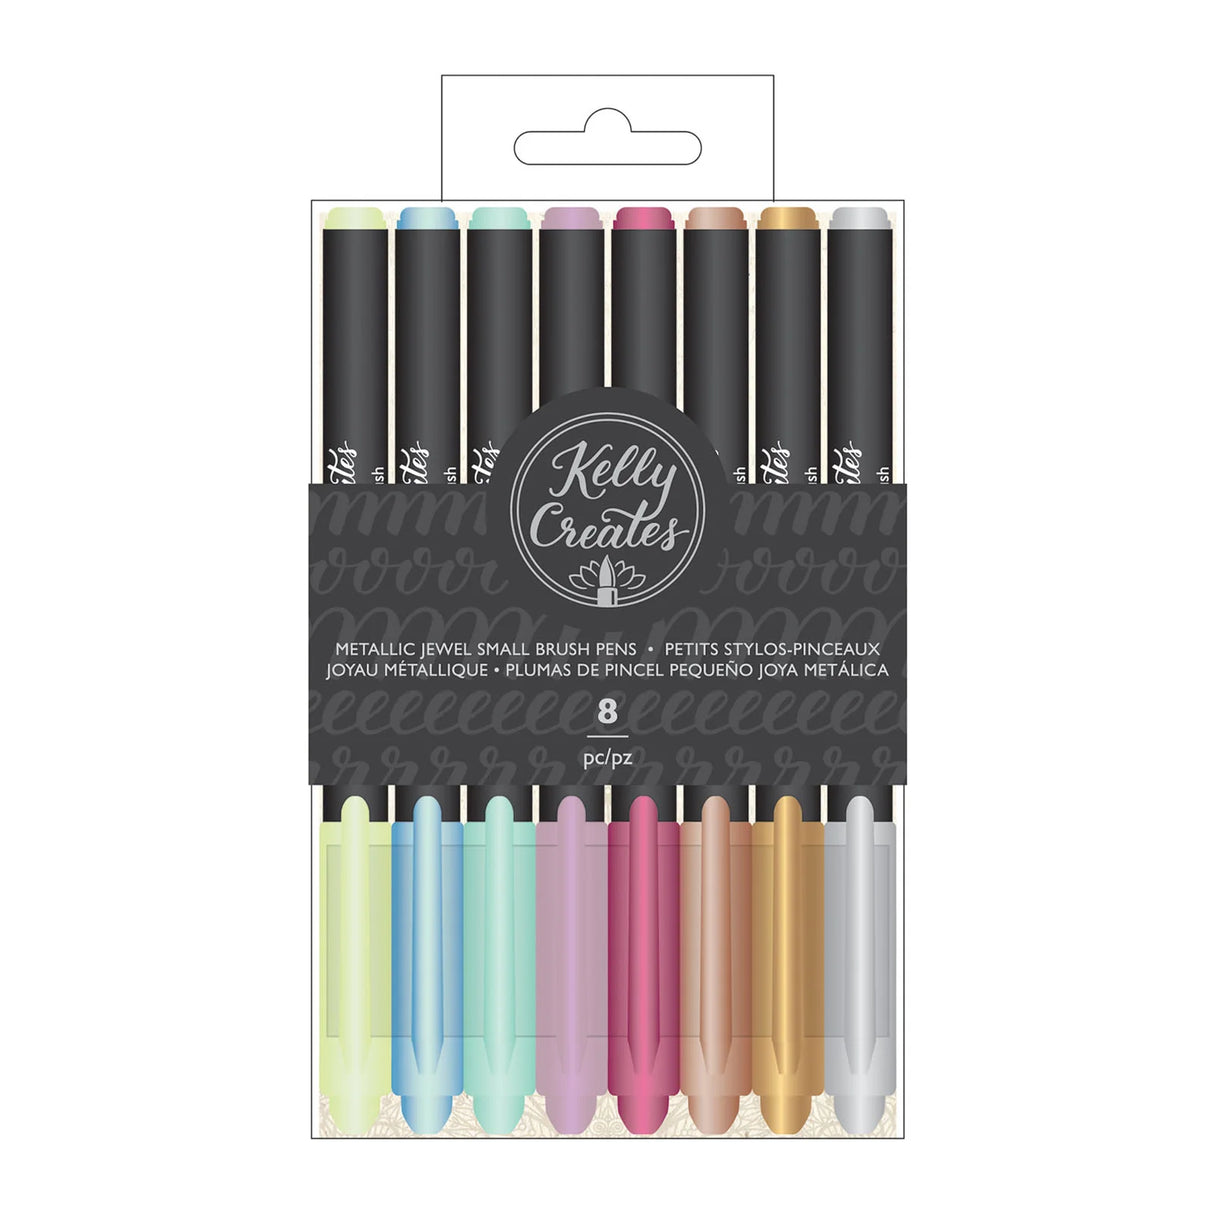 Kelly Creates • Pen small brush metallic jewel 8pcs